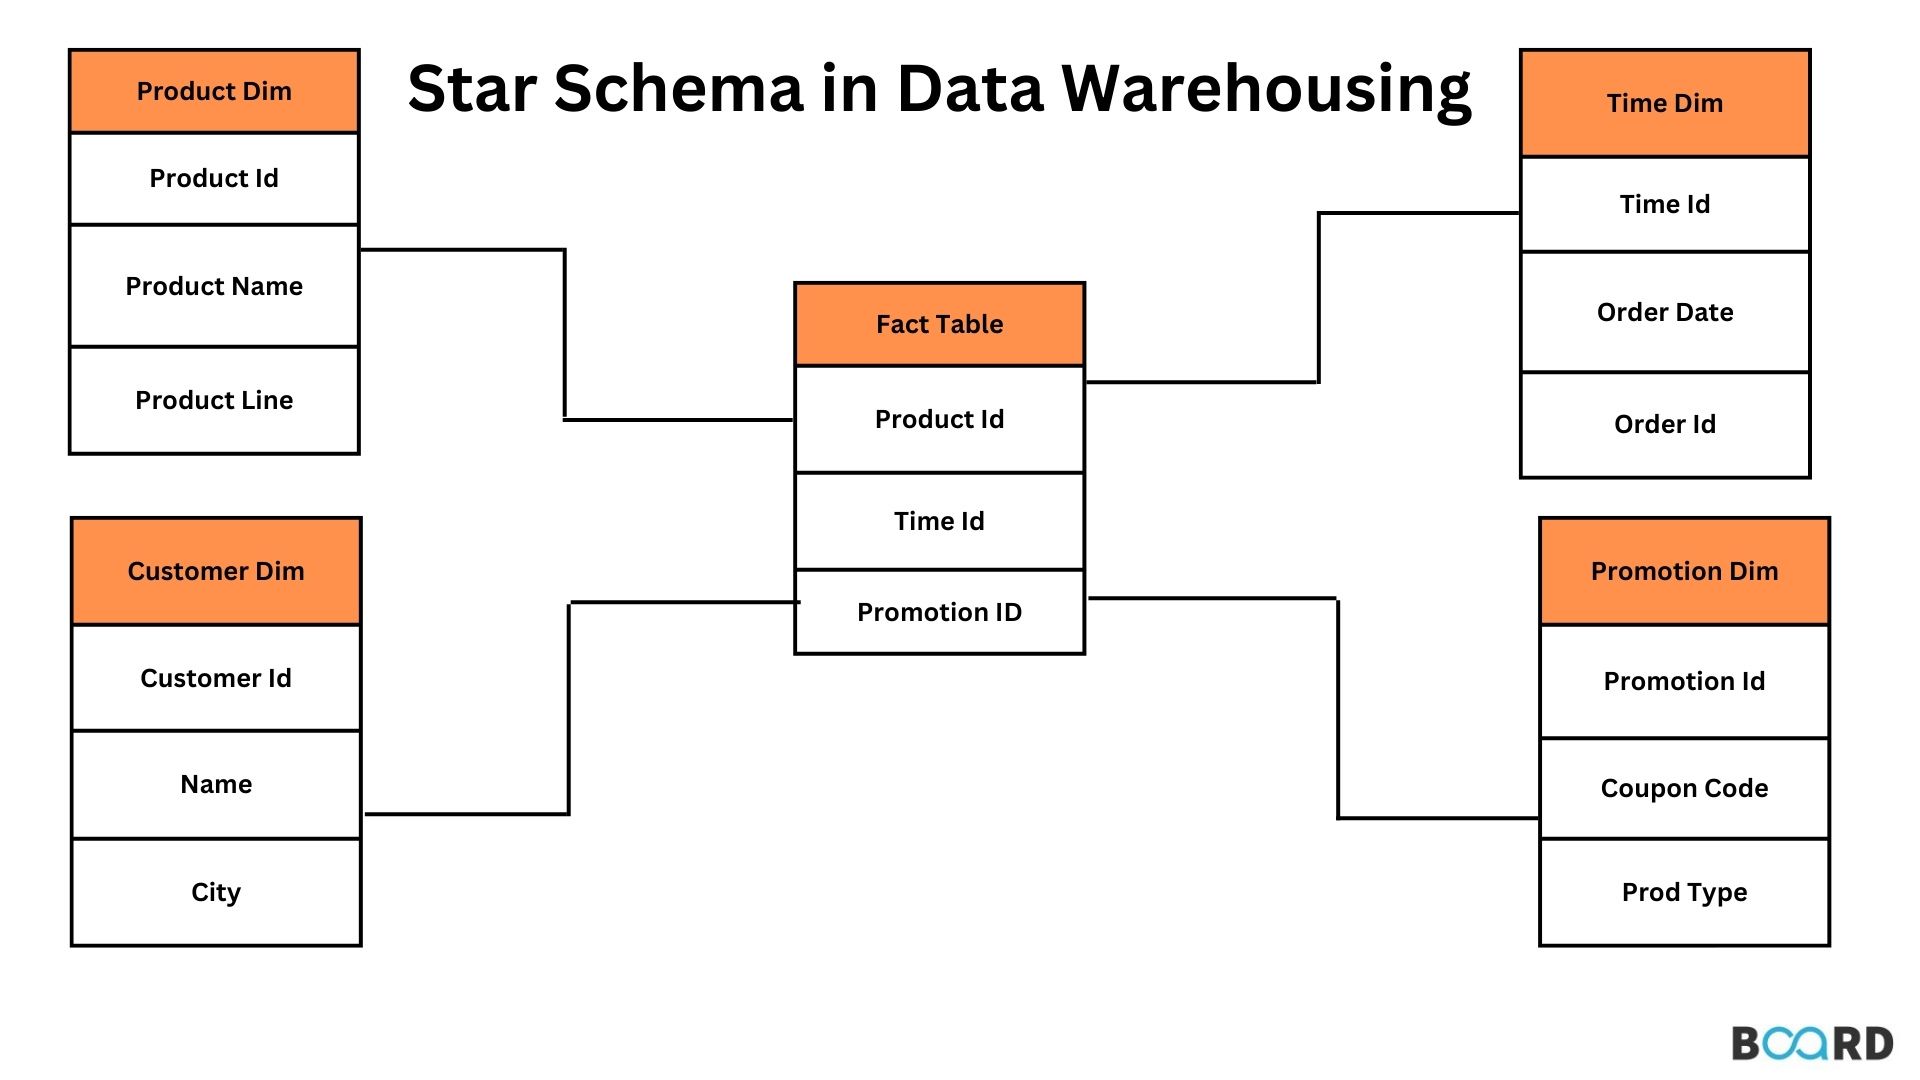 A Quick Guide to Star Schema in Data Warehousing